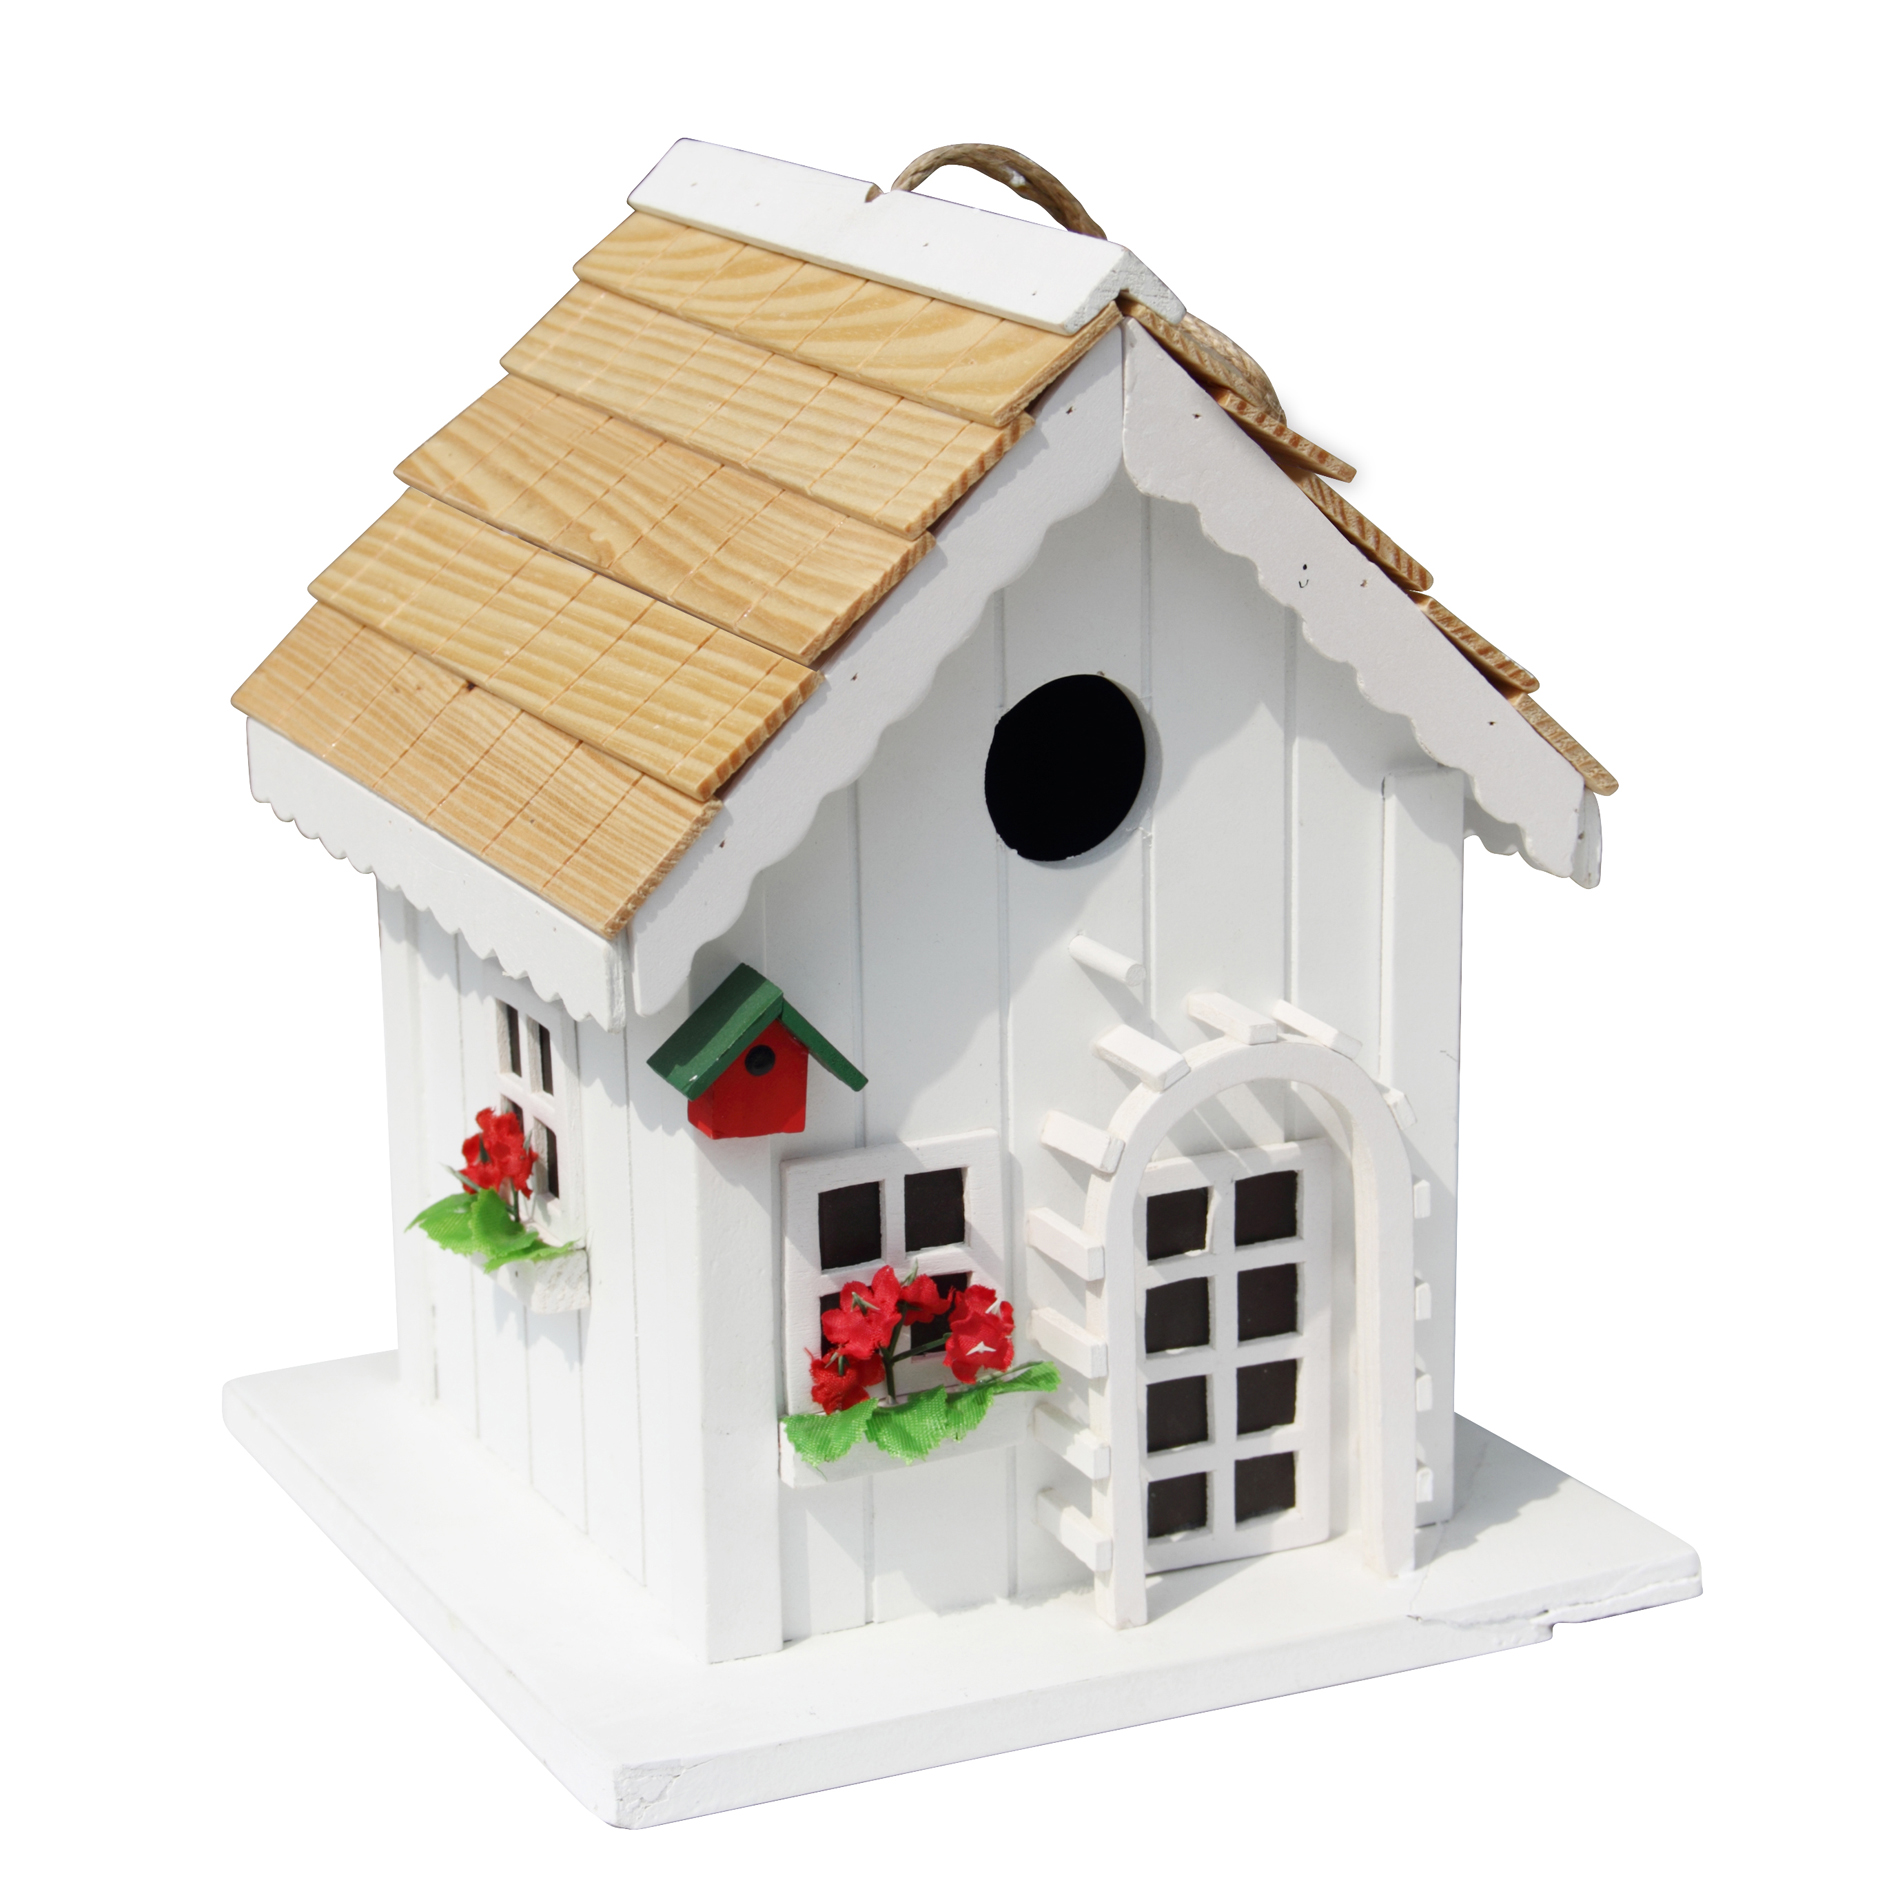 Decorative Wood House Bird Feeder w/ Red Trim | Shop Your Way ...